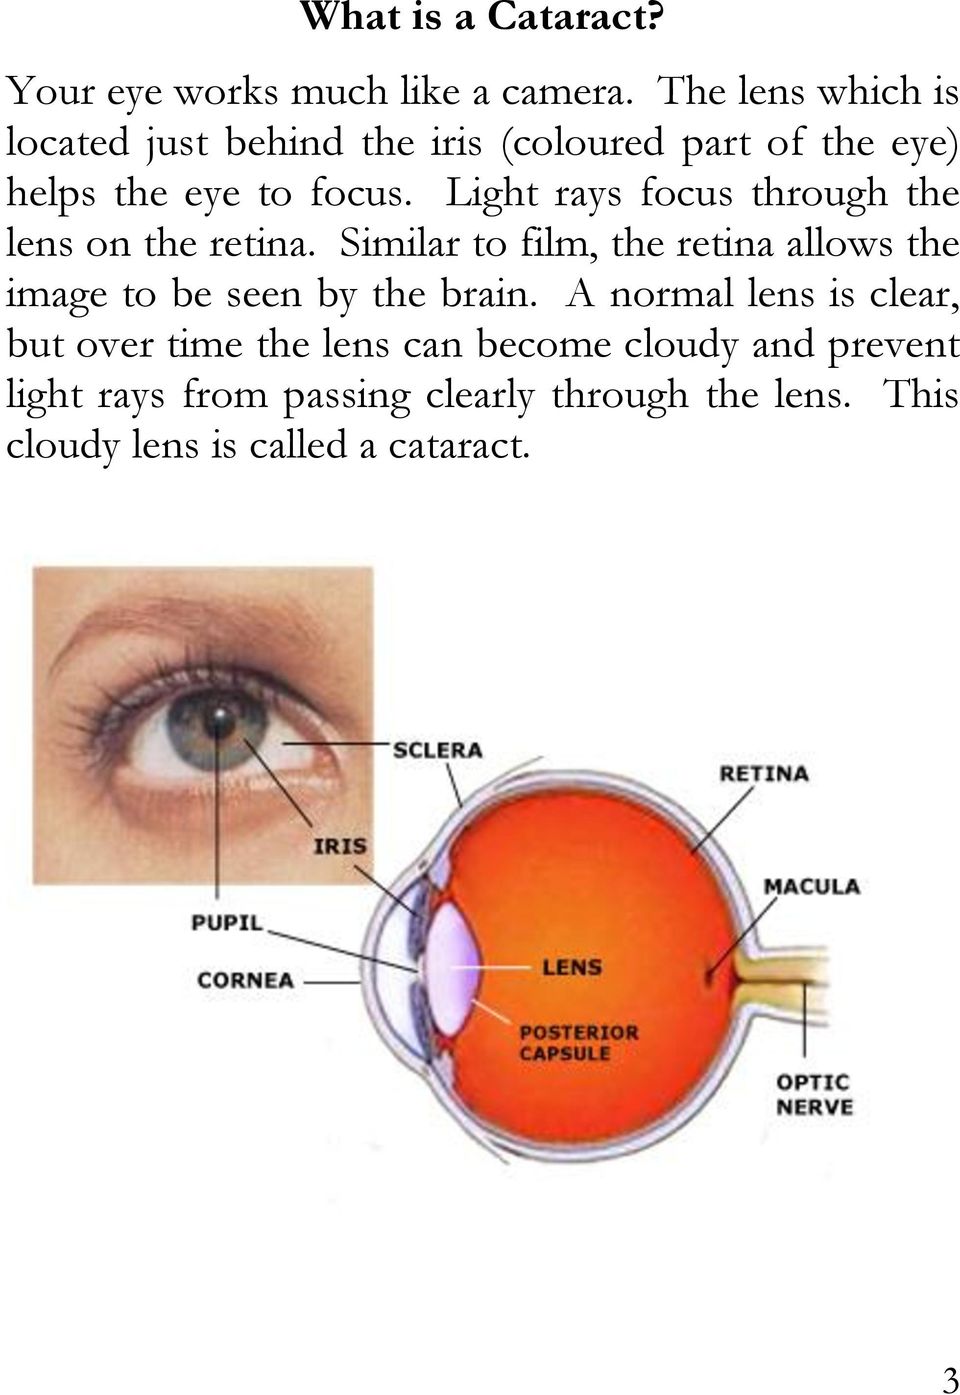 Light rays focus through the lens on the retina.